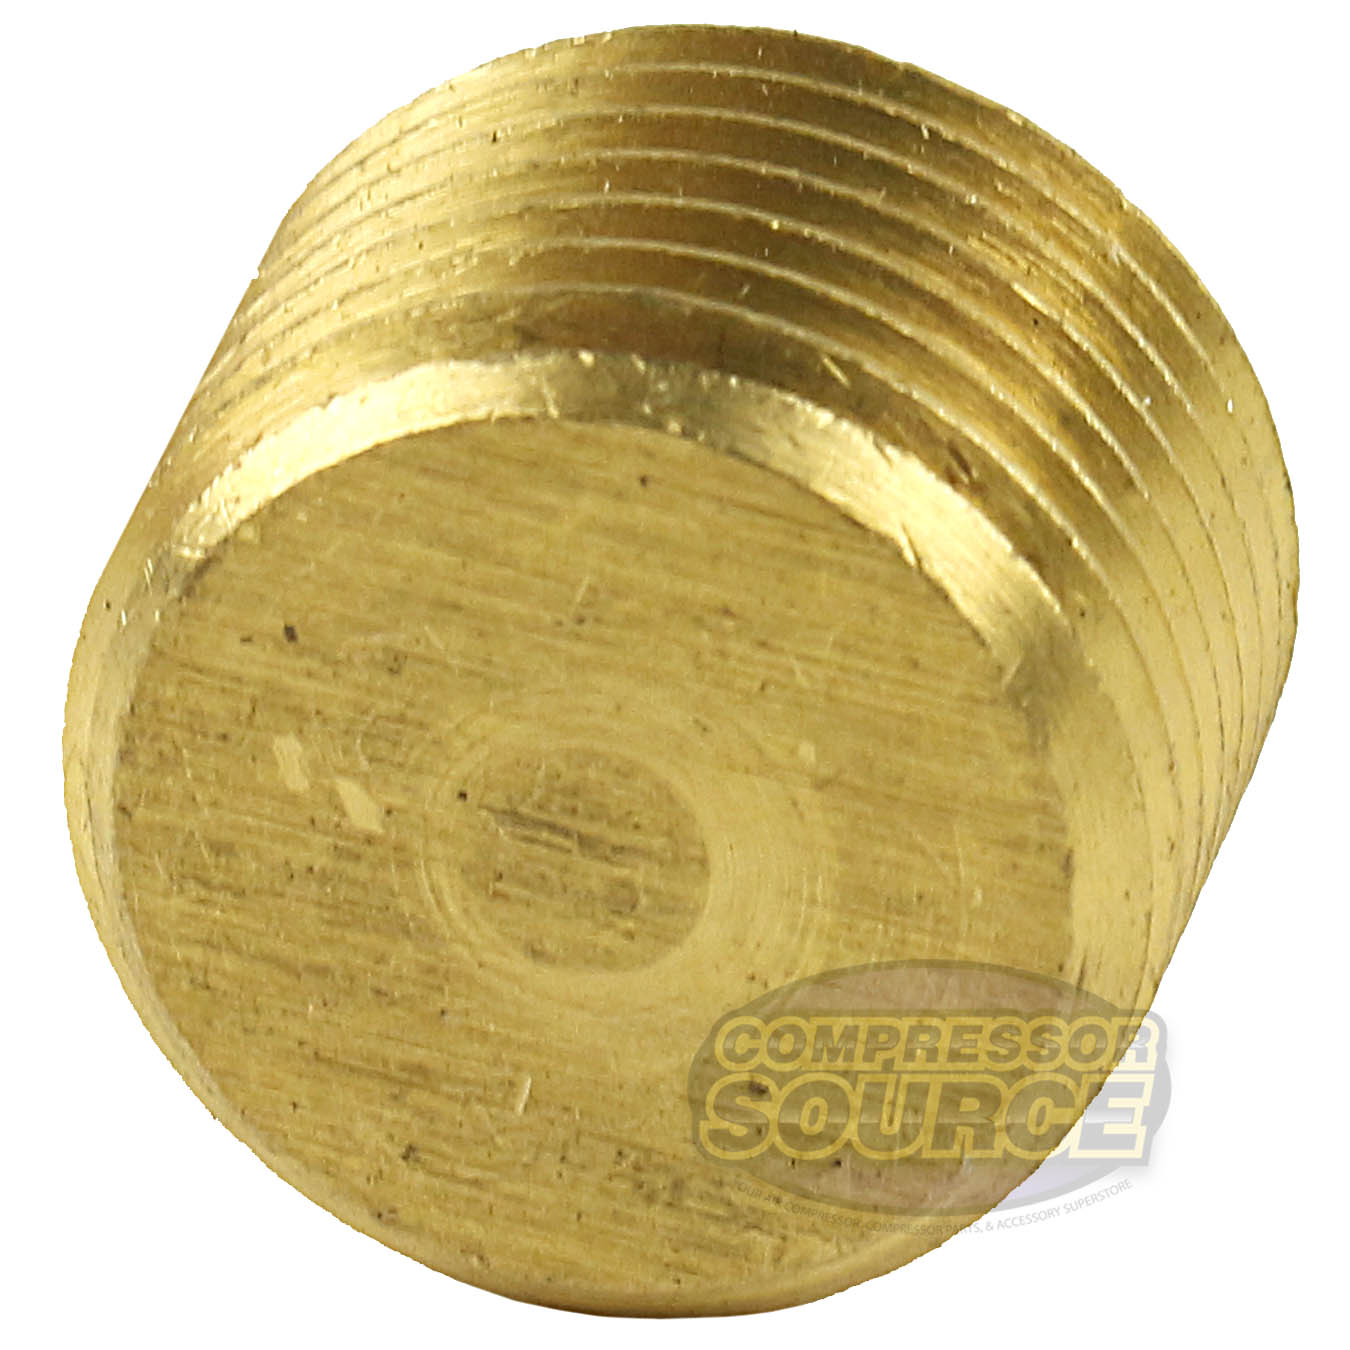 3/8" Solid Brass Male NPT Thread Allen Head Pipe Plug Hex Socket 50135 2-Pack